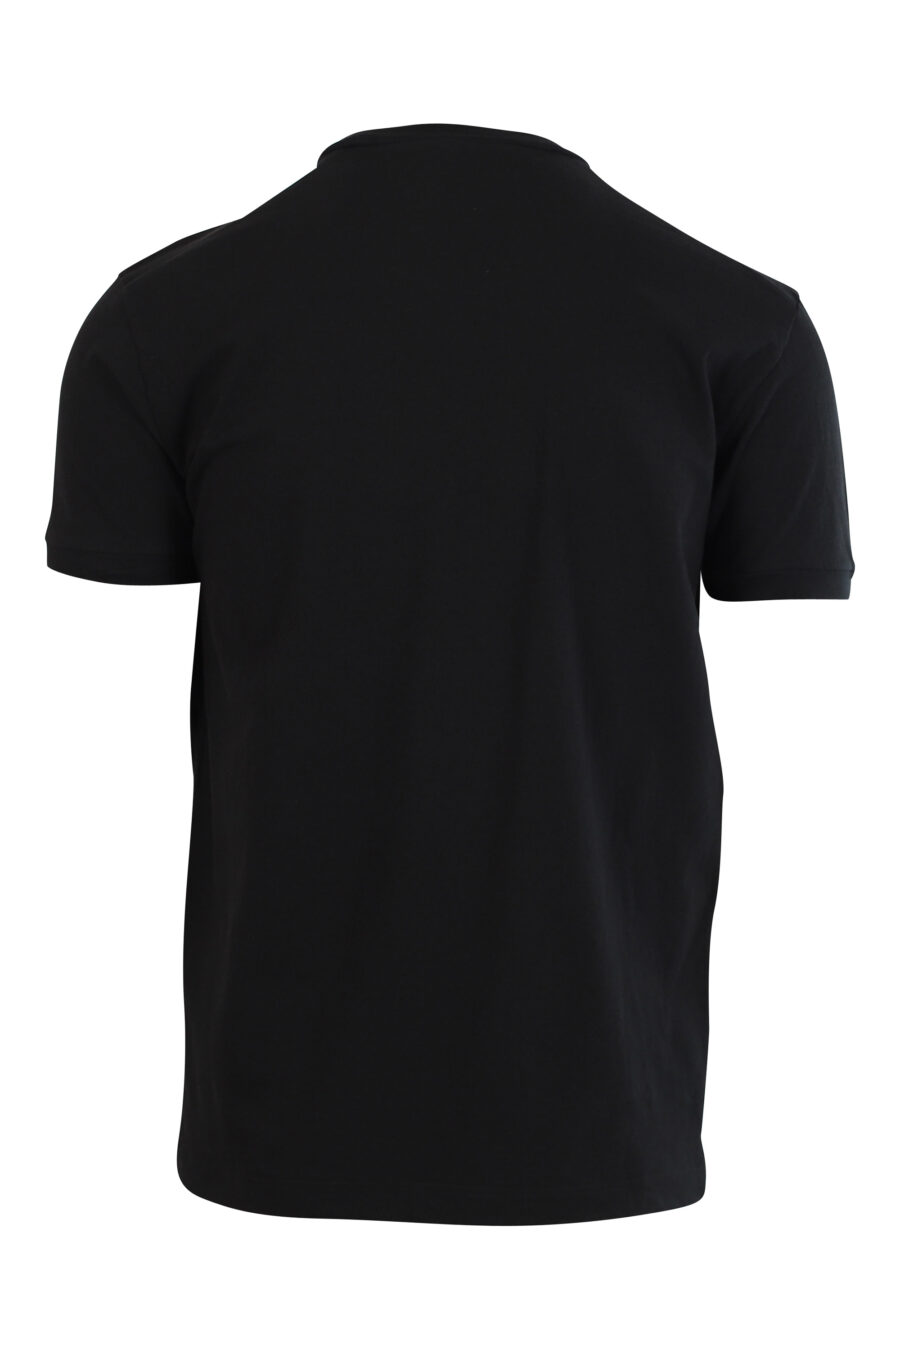 Camiseta negra con minilogo "dsquared2 milano" - 8058049836090 2